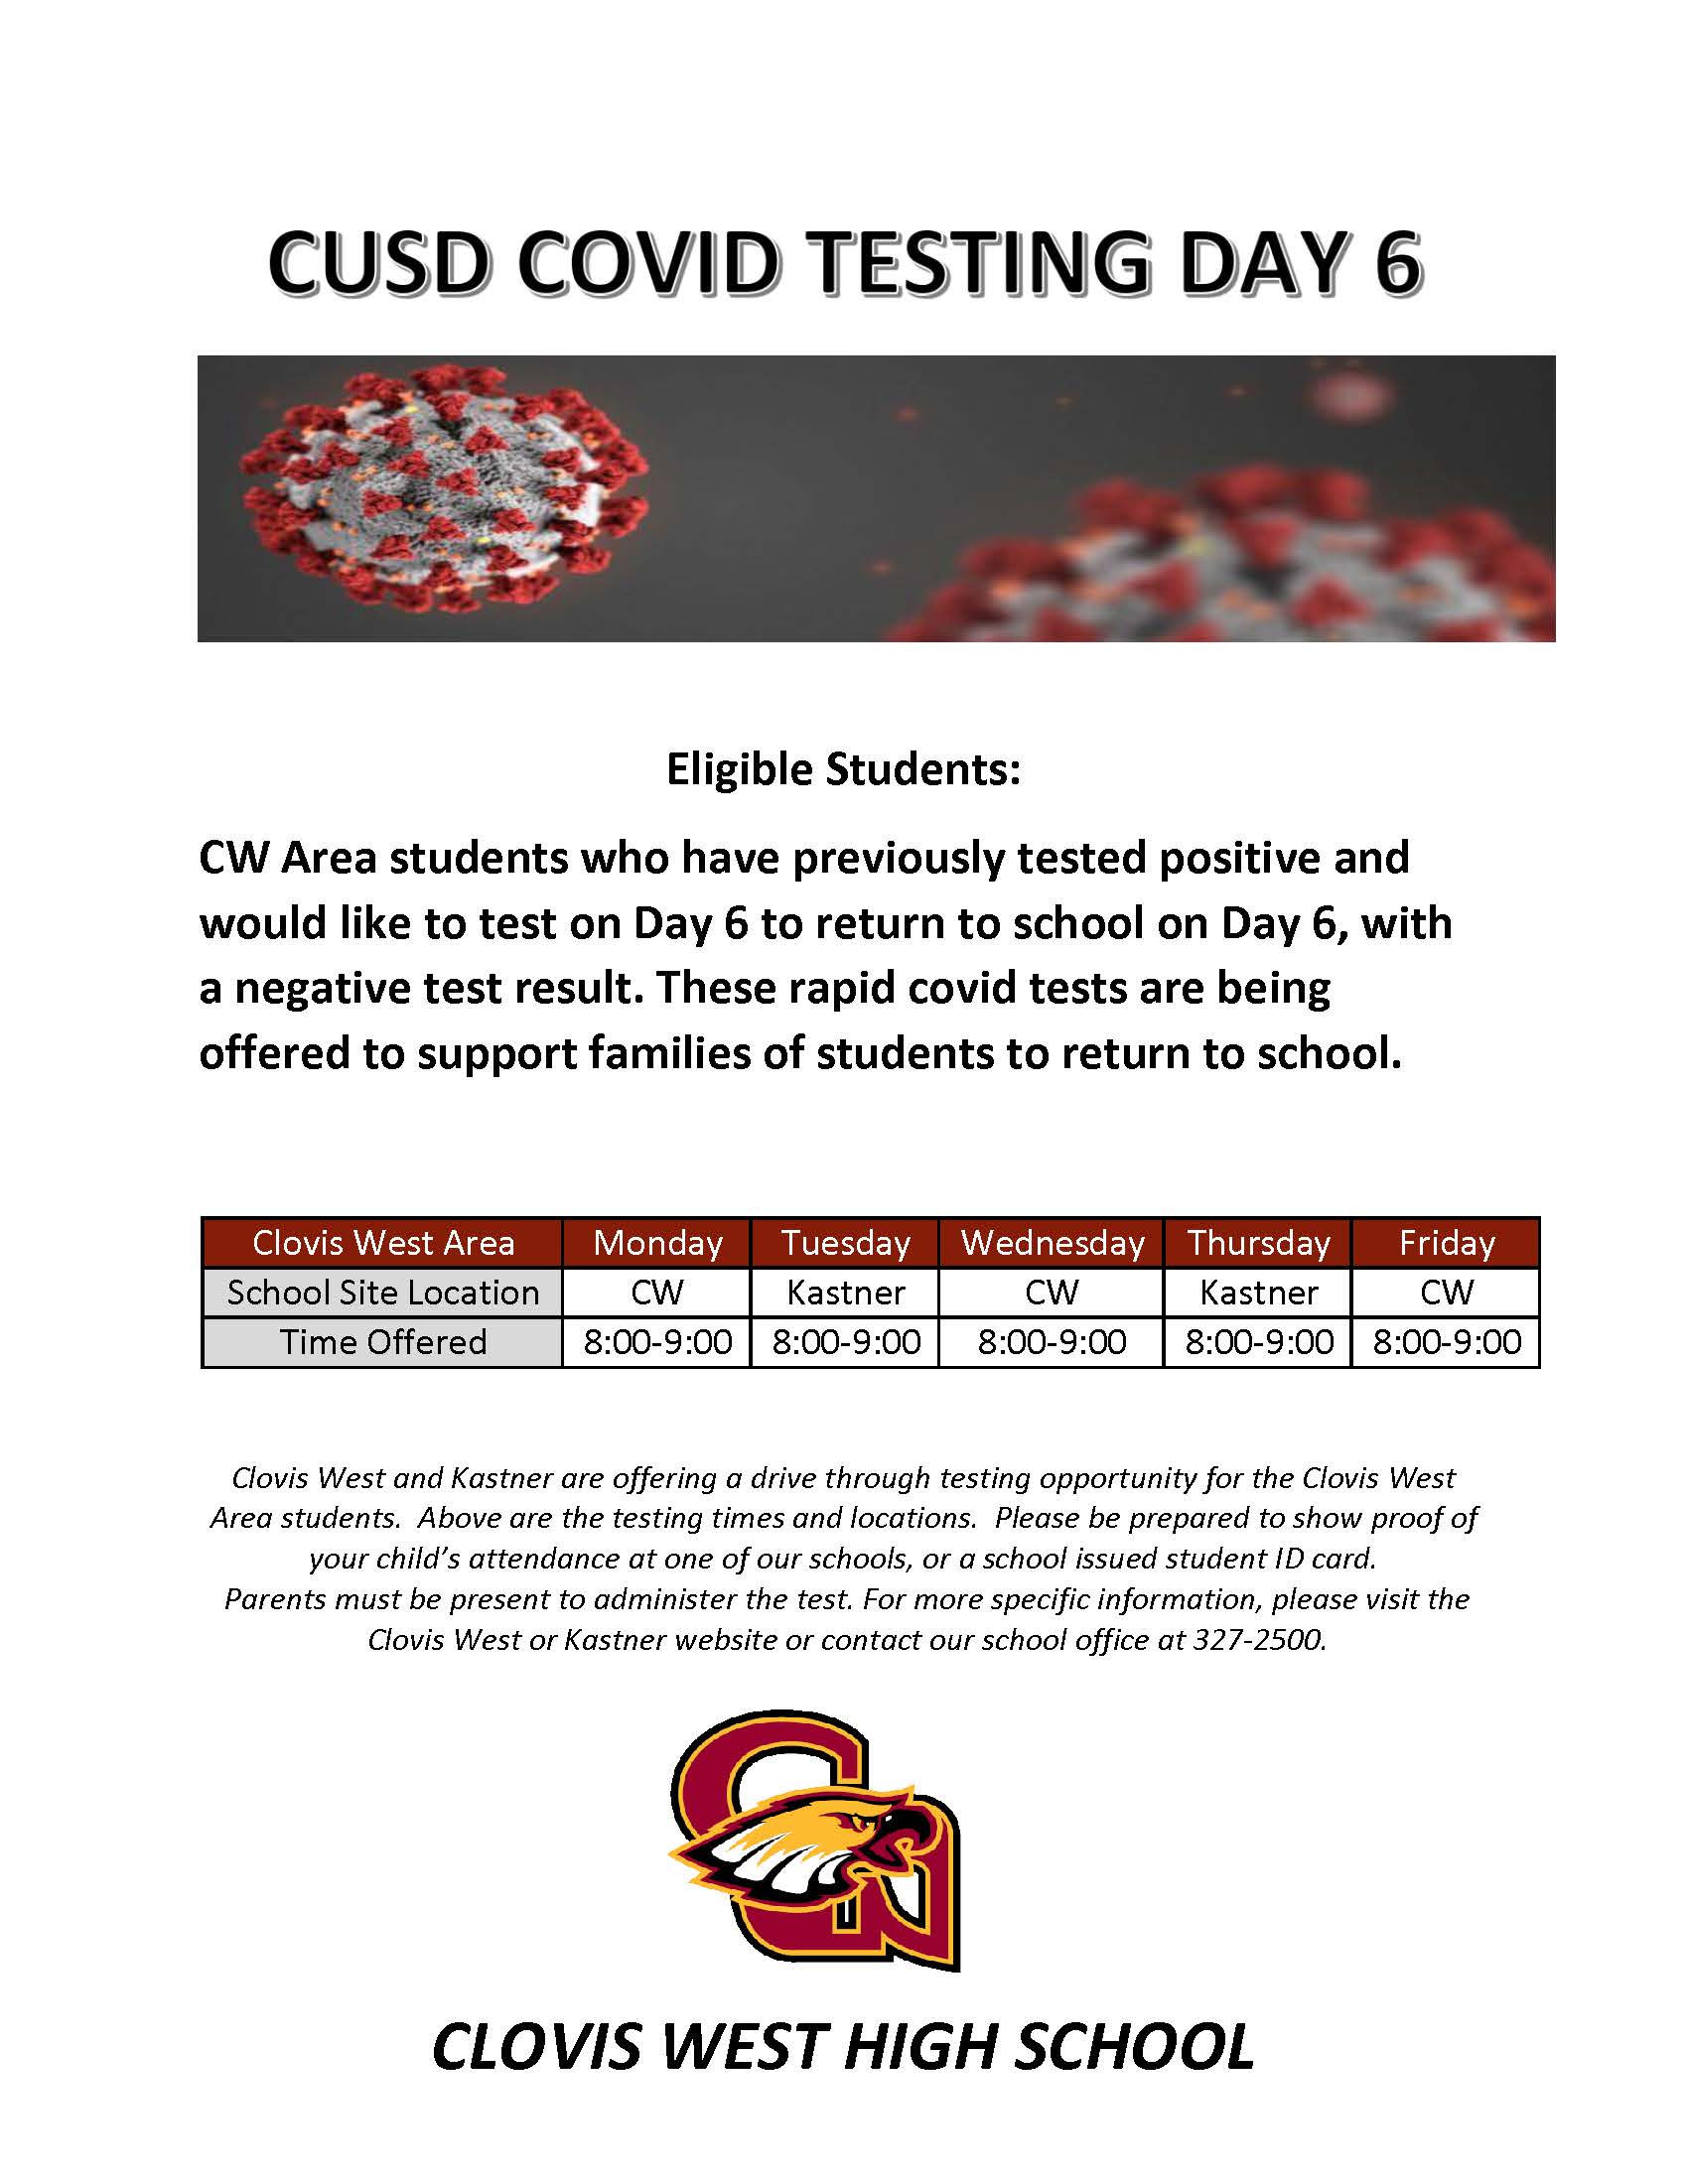 COVID Testing Day 6